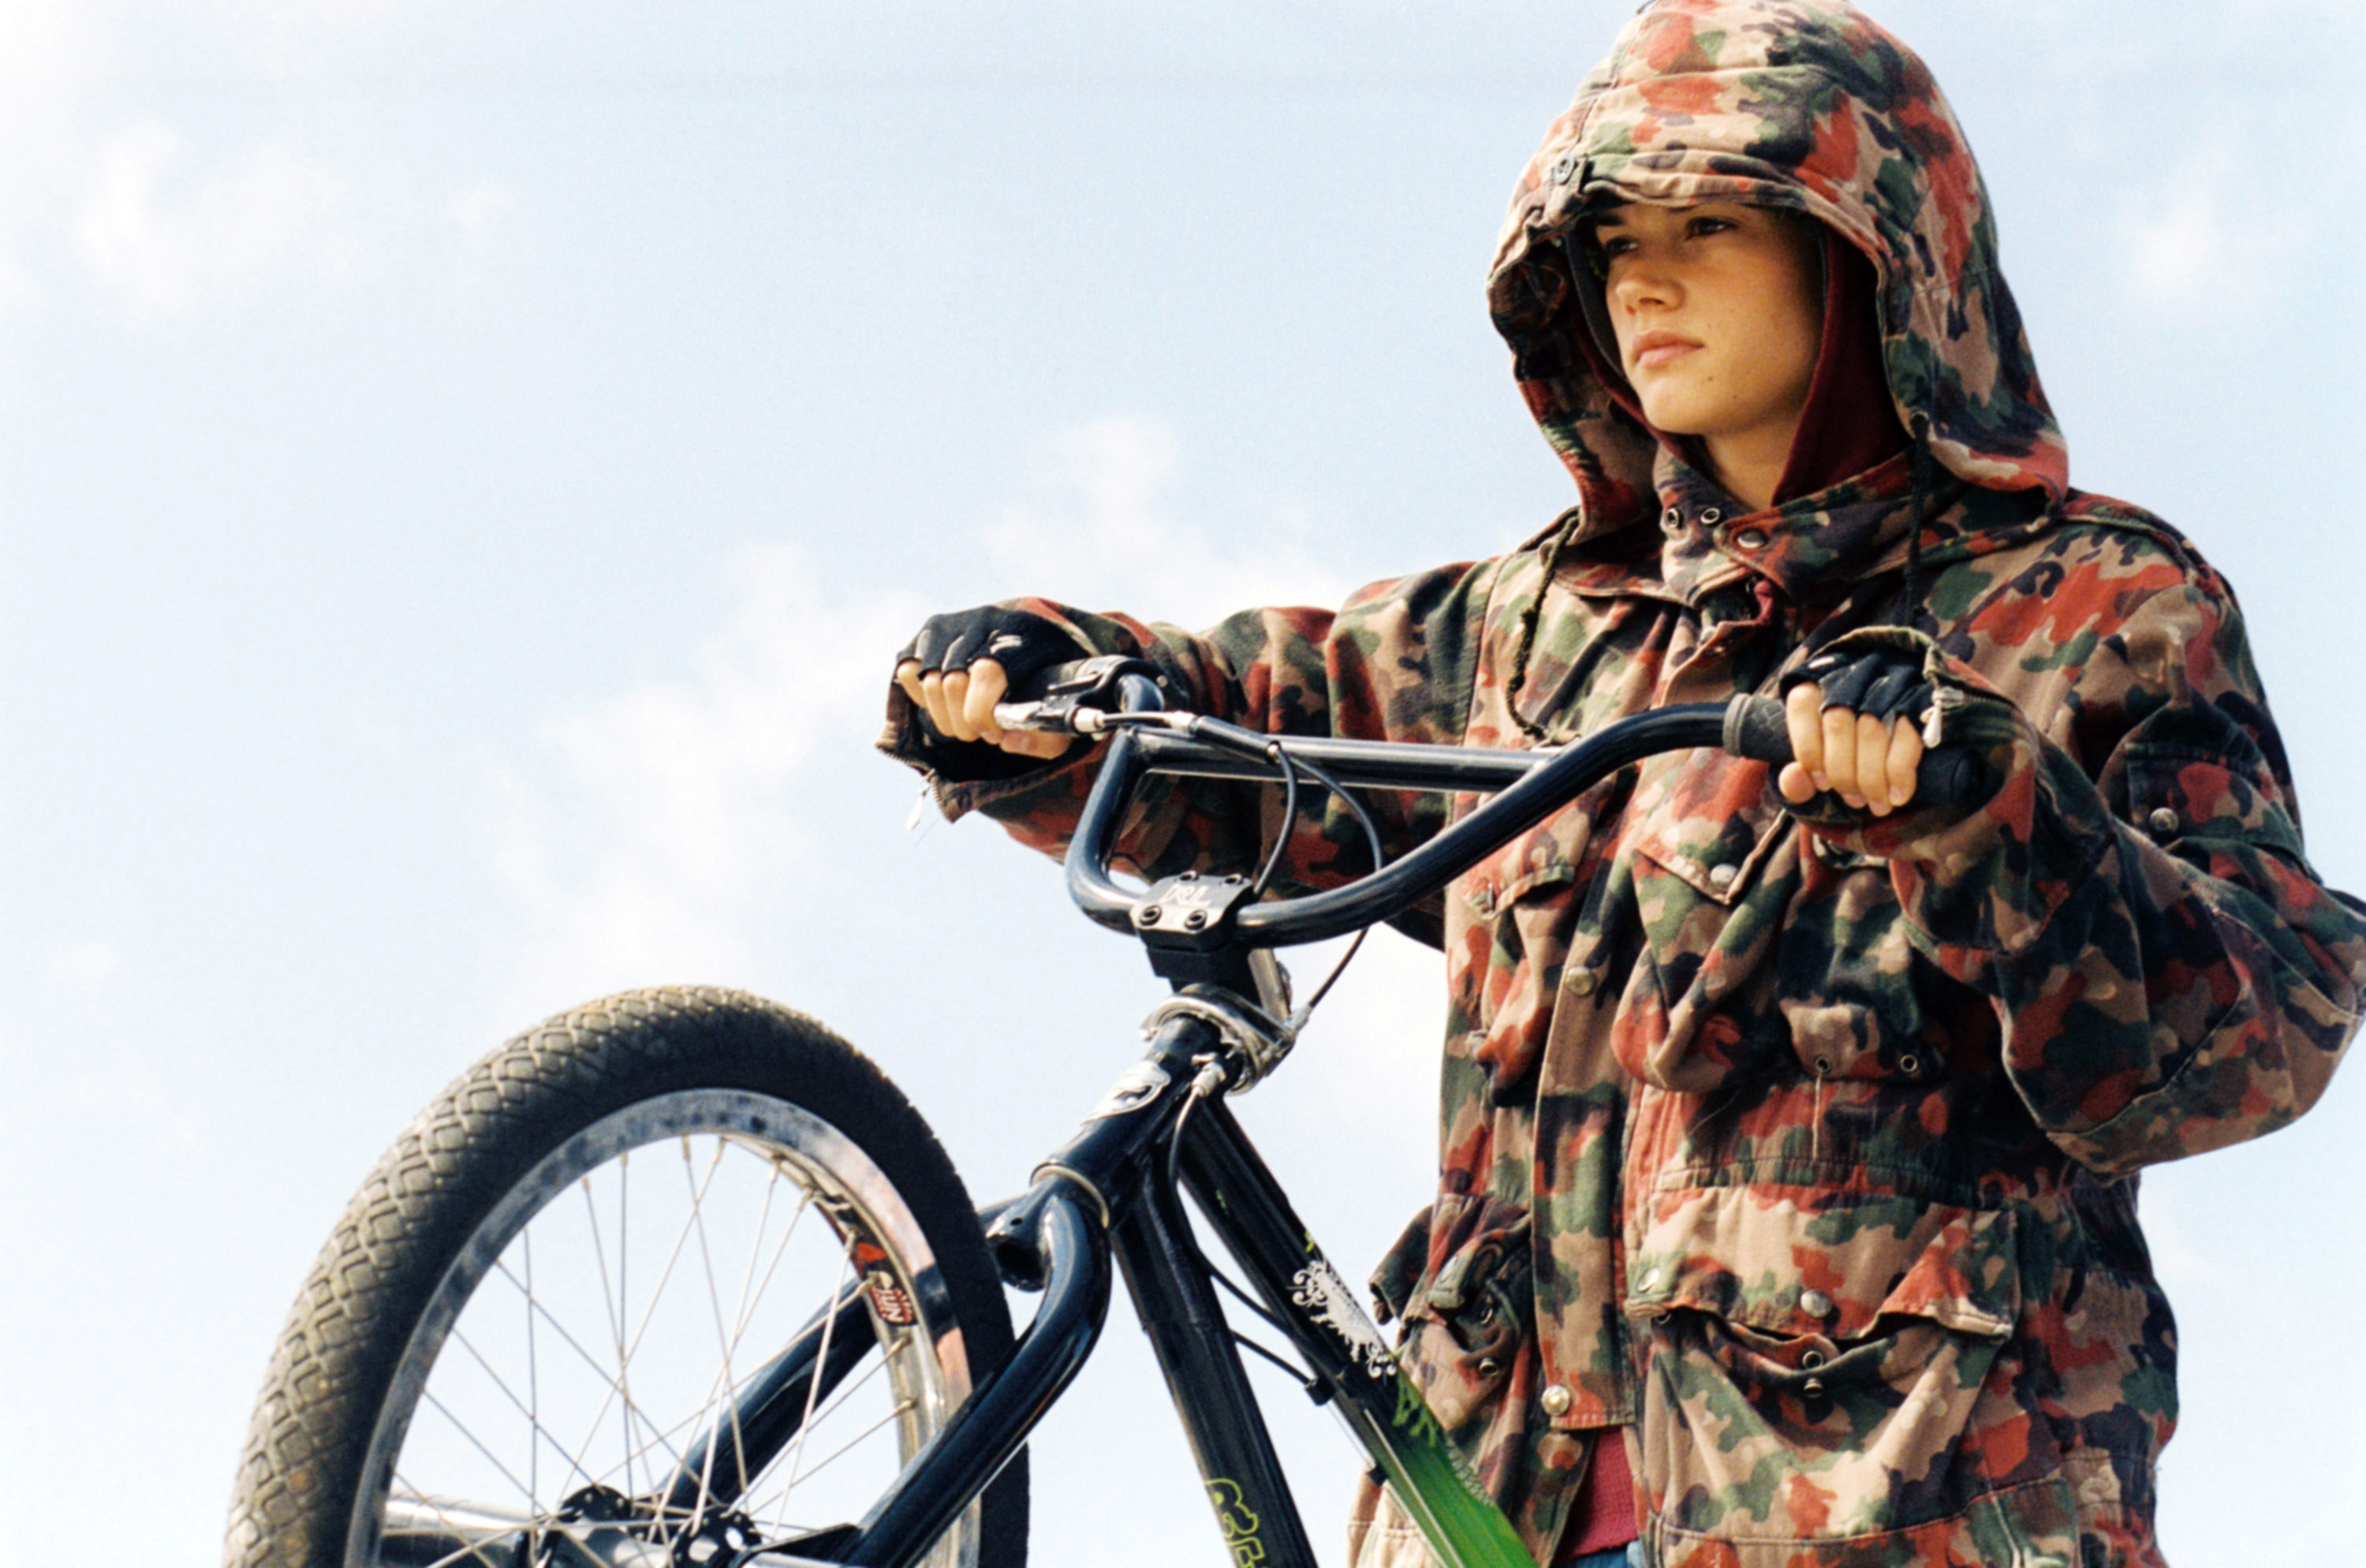 A girl in a camo jacket holds onto a bike.